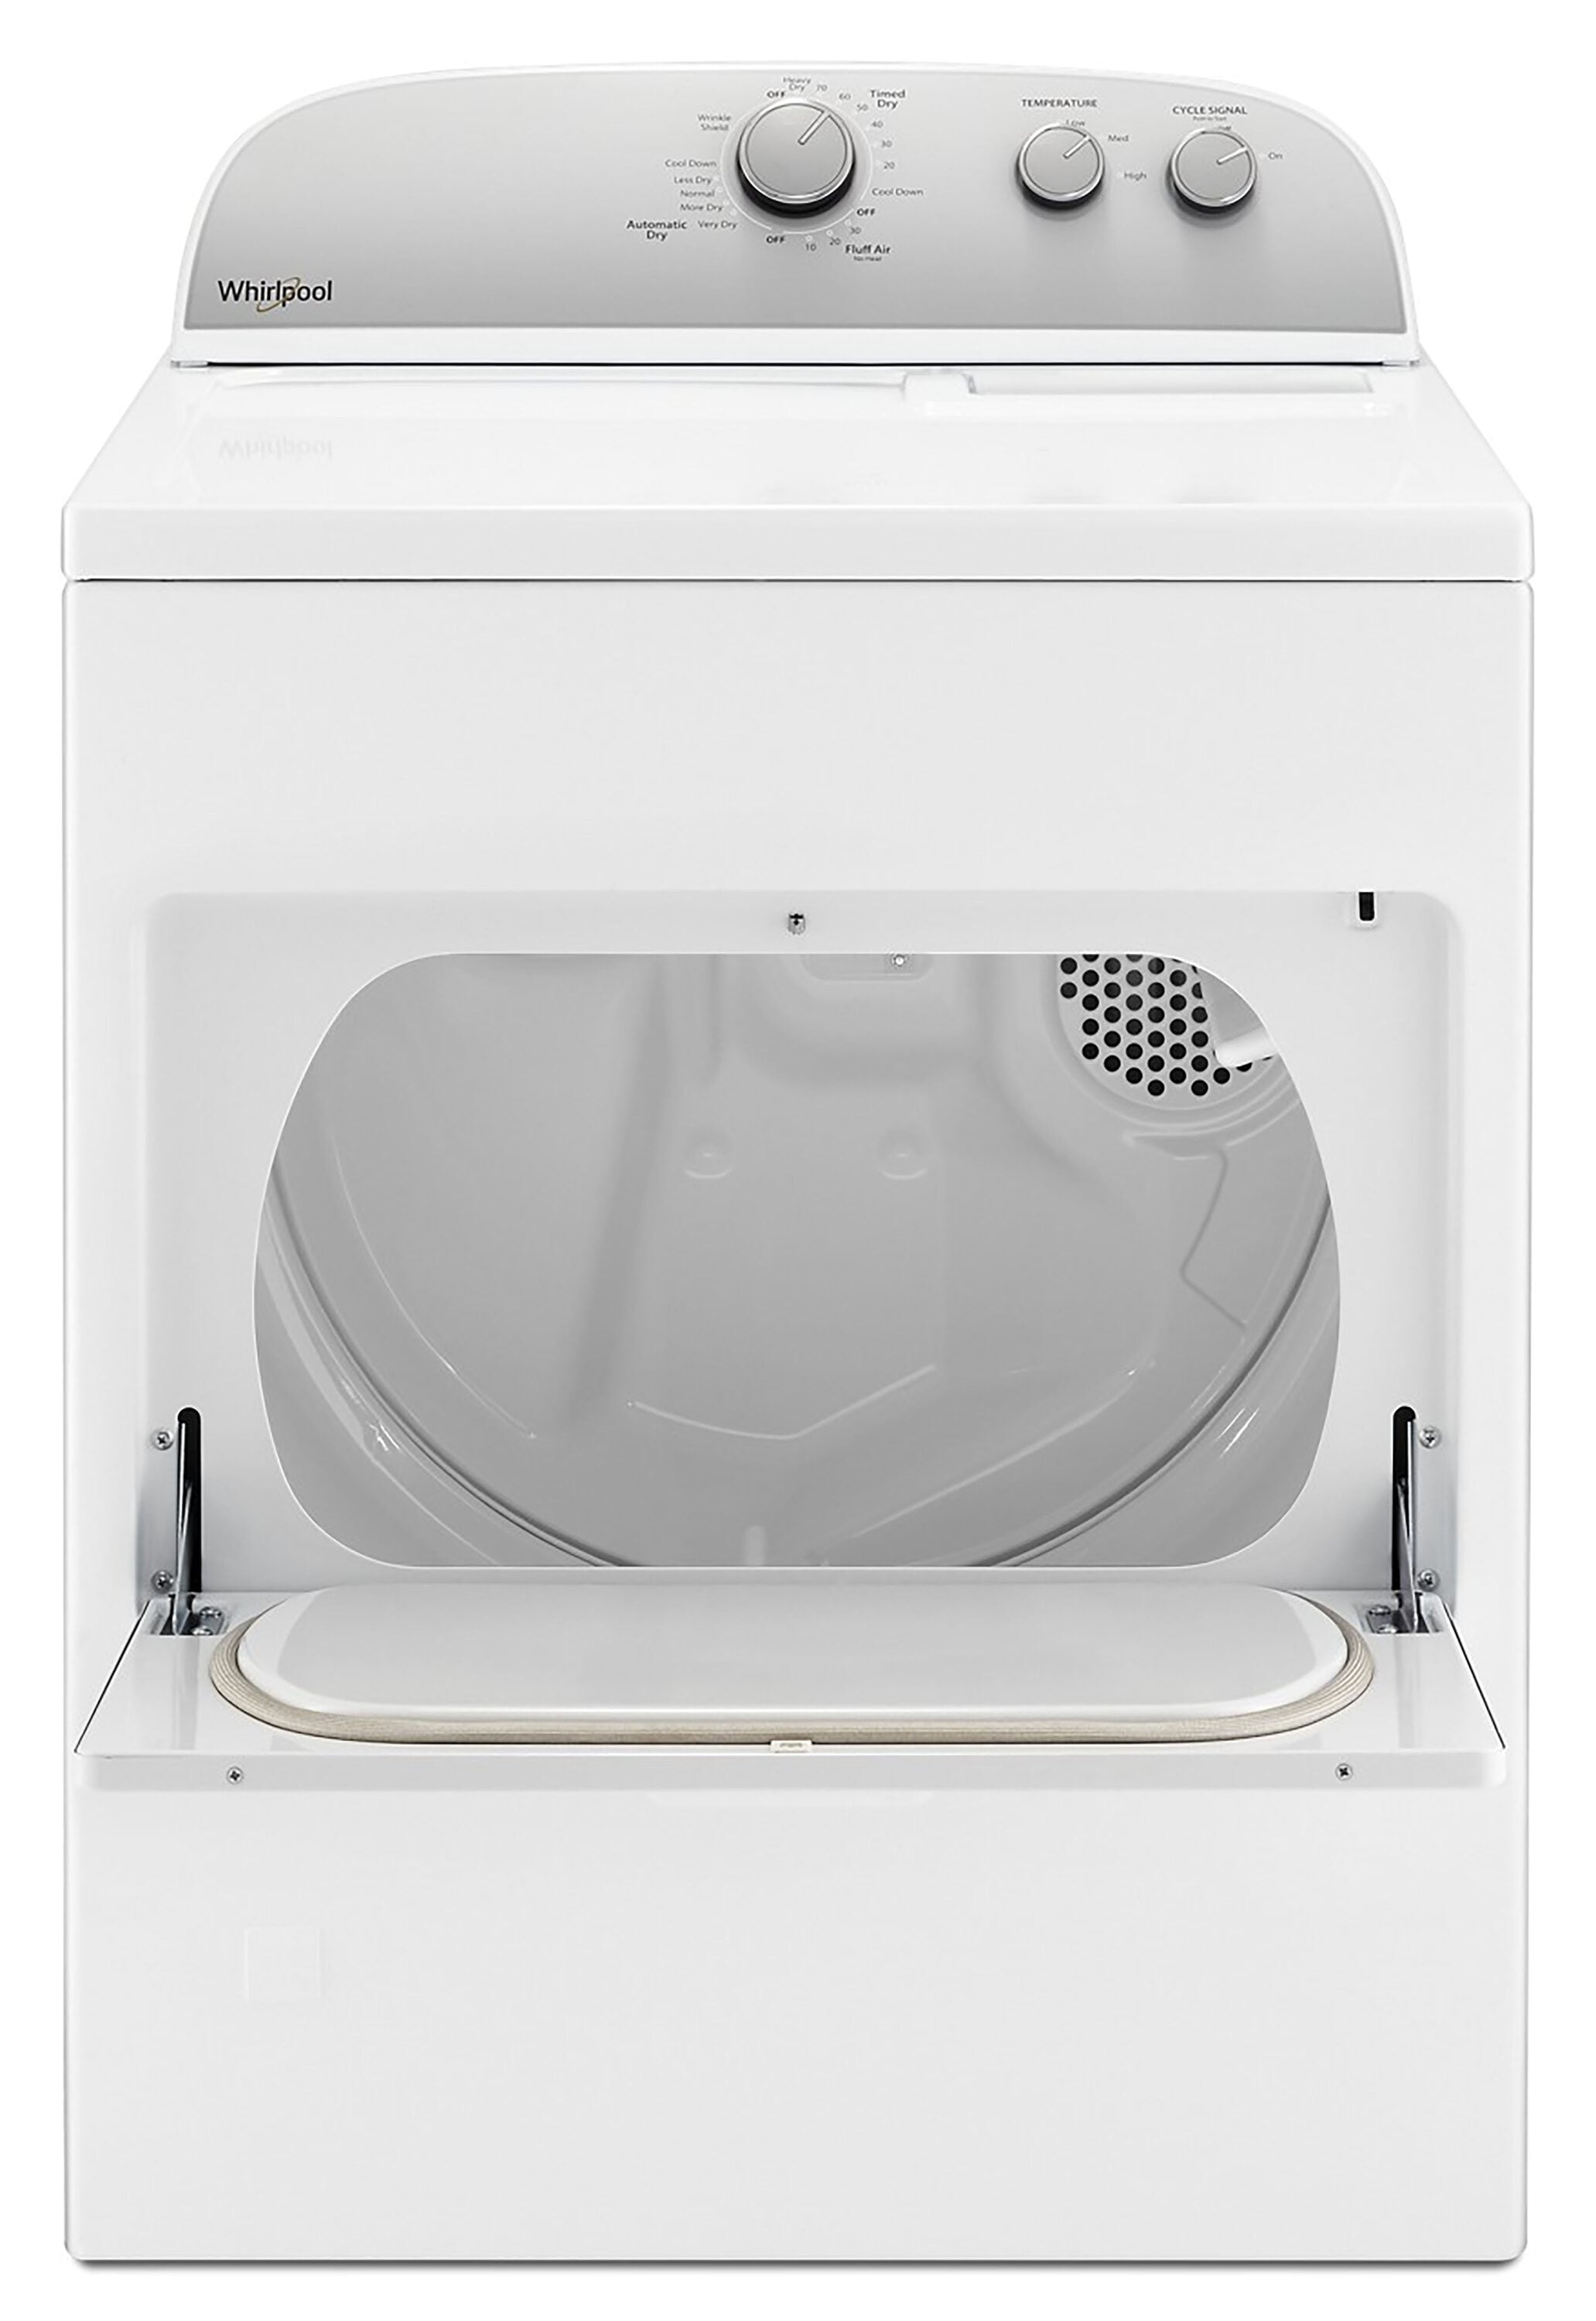 Kenmore 71112 7.4 cu. ft. Gas Dryer - White, Urner's